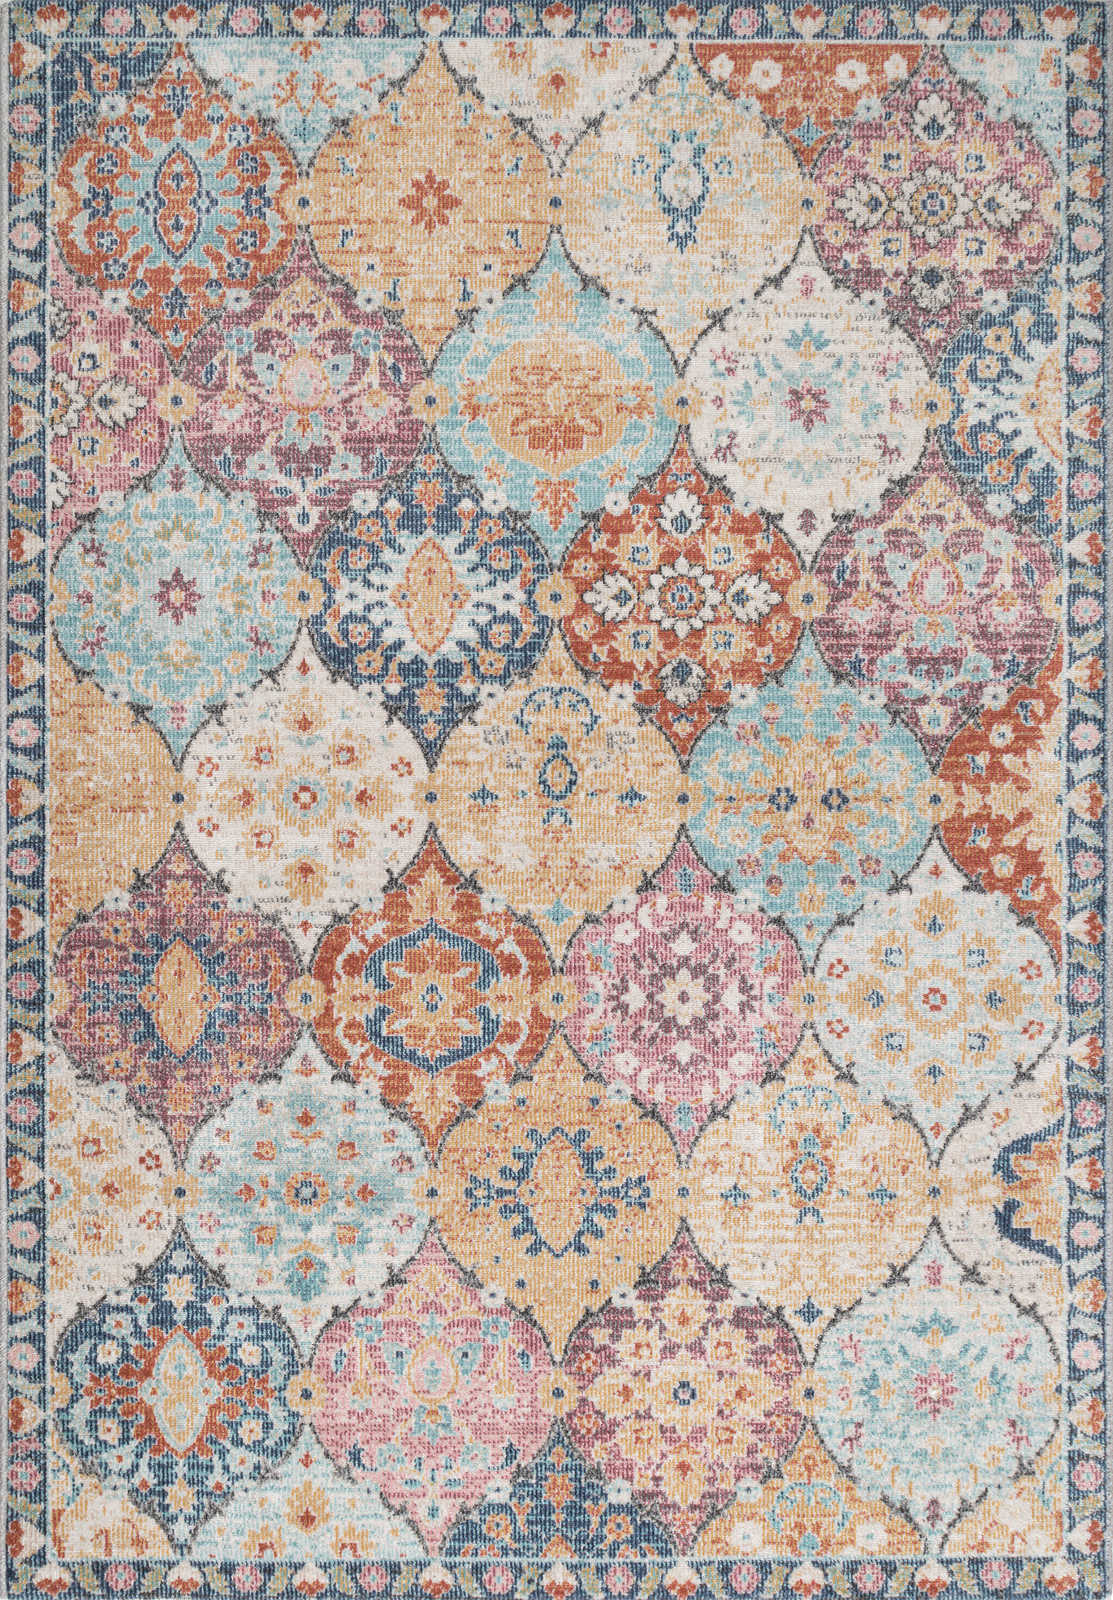             Bunter Outdoor Teppich aus Flachgewebe – 230 x 160 cm
        